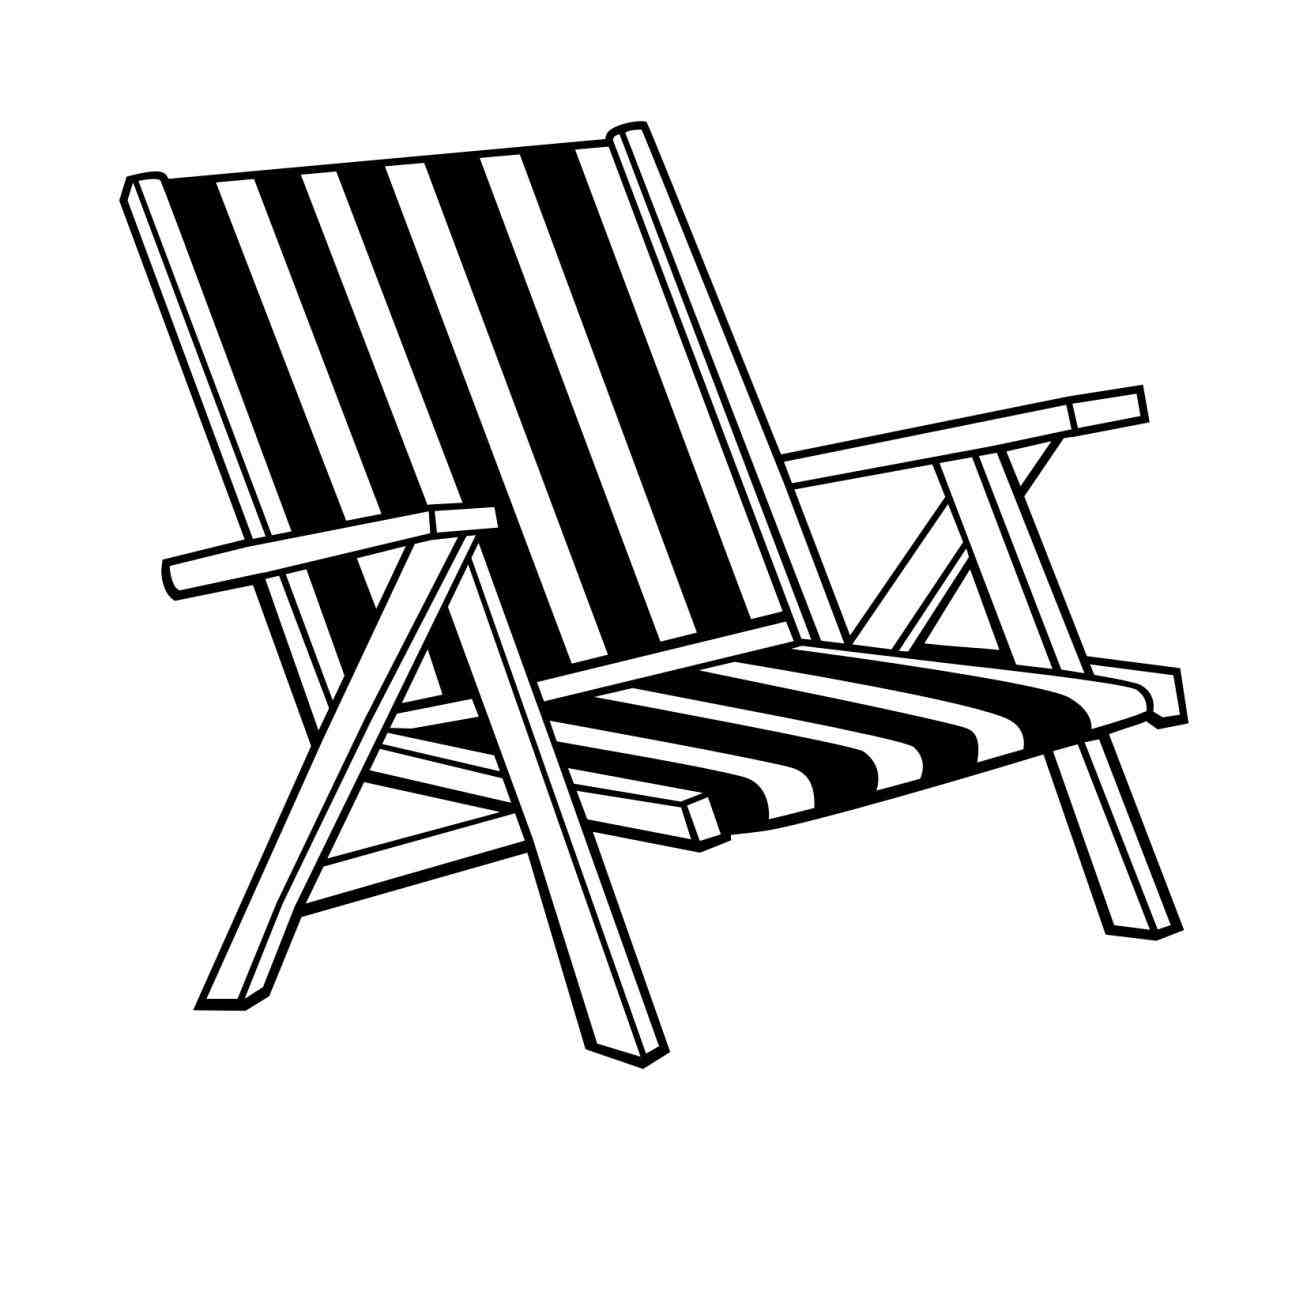 Chair Clipart. chair clipart black and white rocking chair.